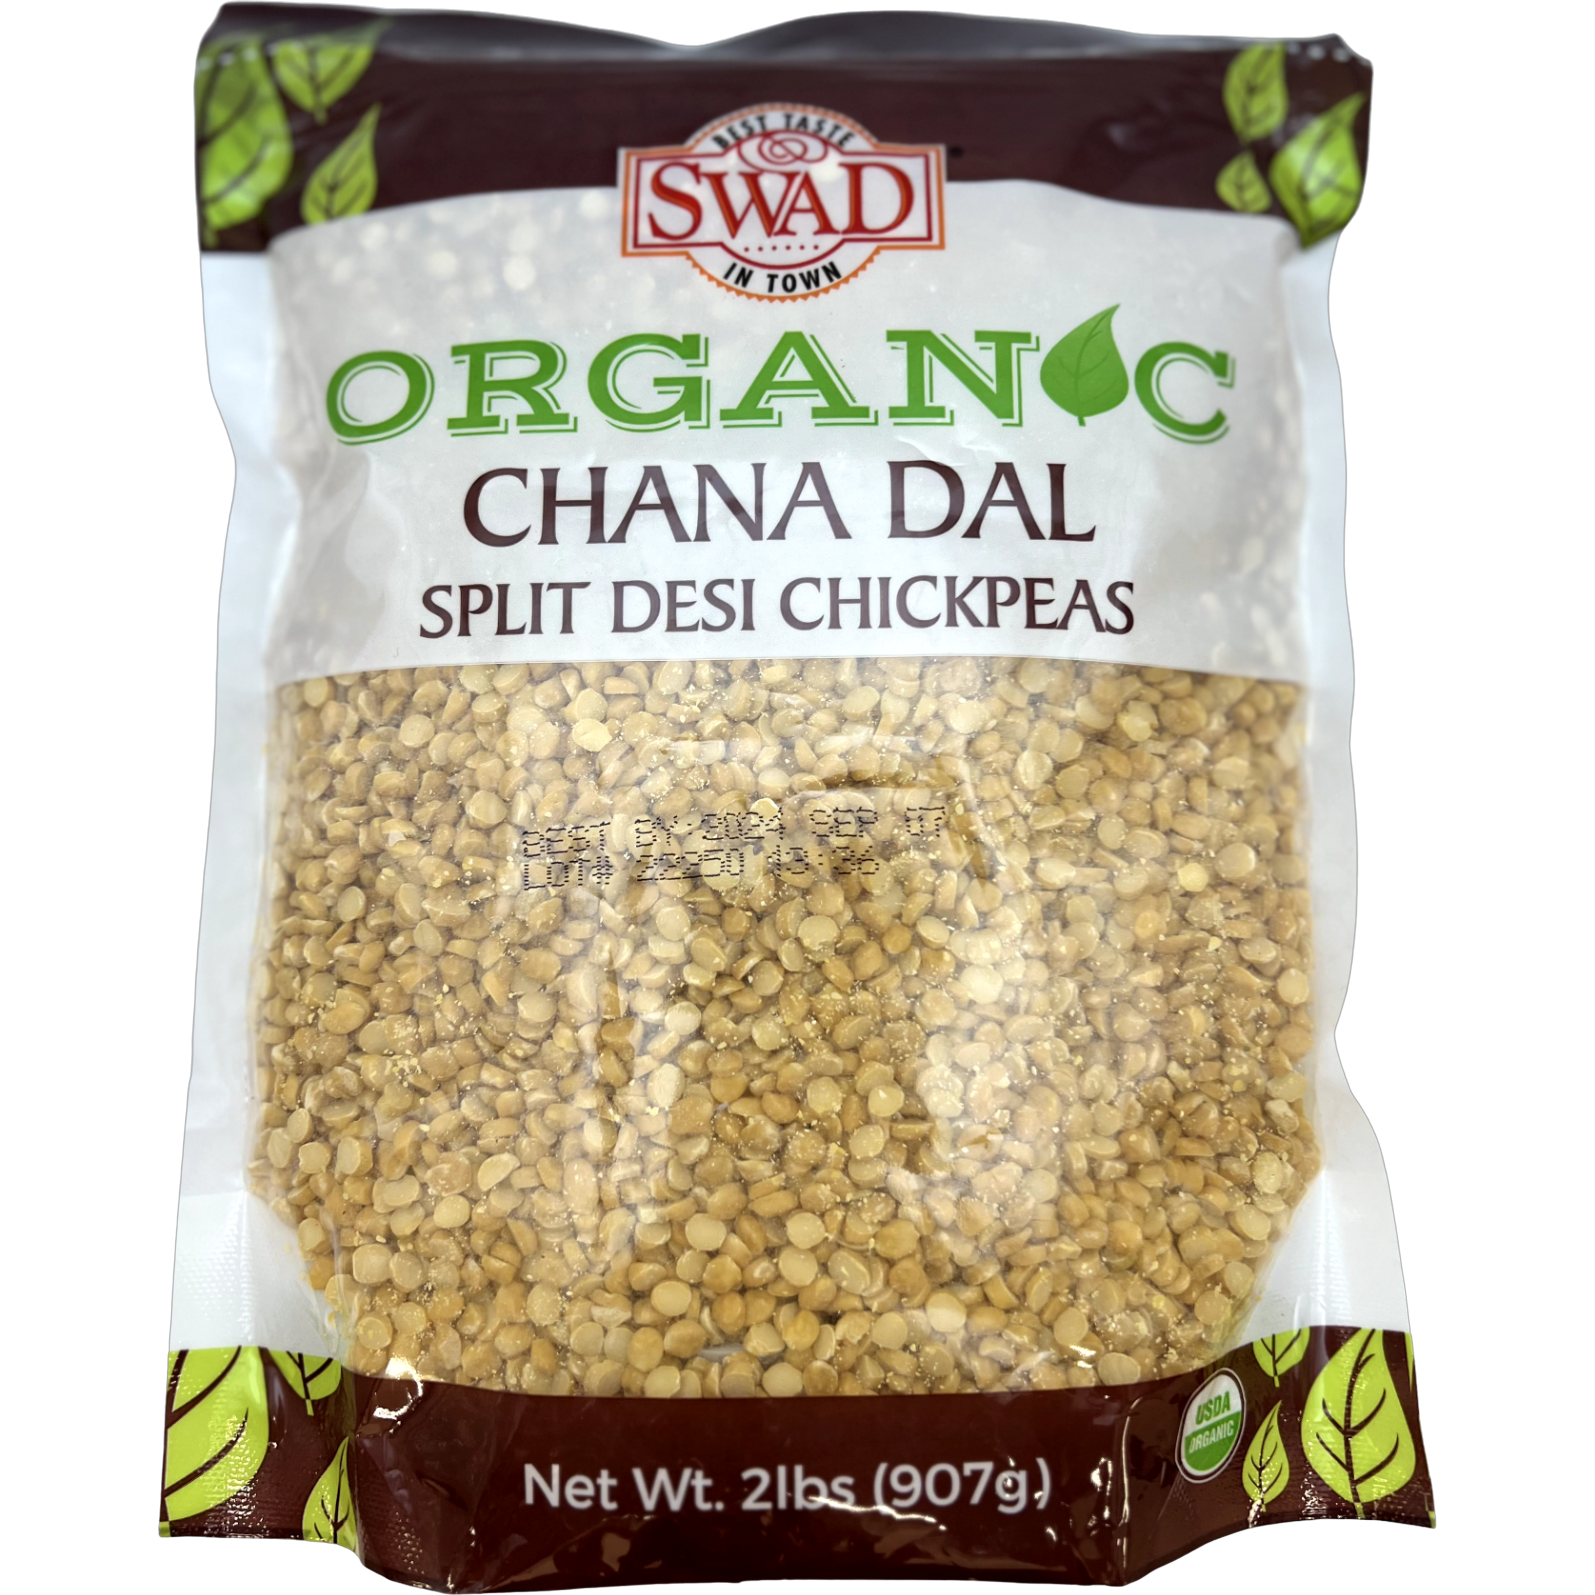 Swad Organic Chana Dal - 2 Lb (907 Gm)